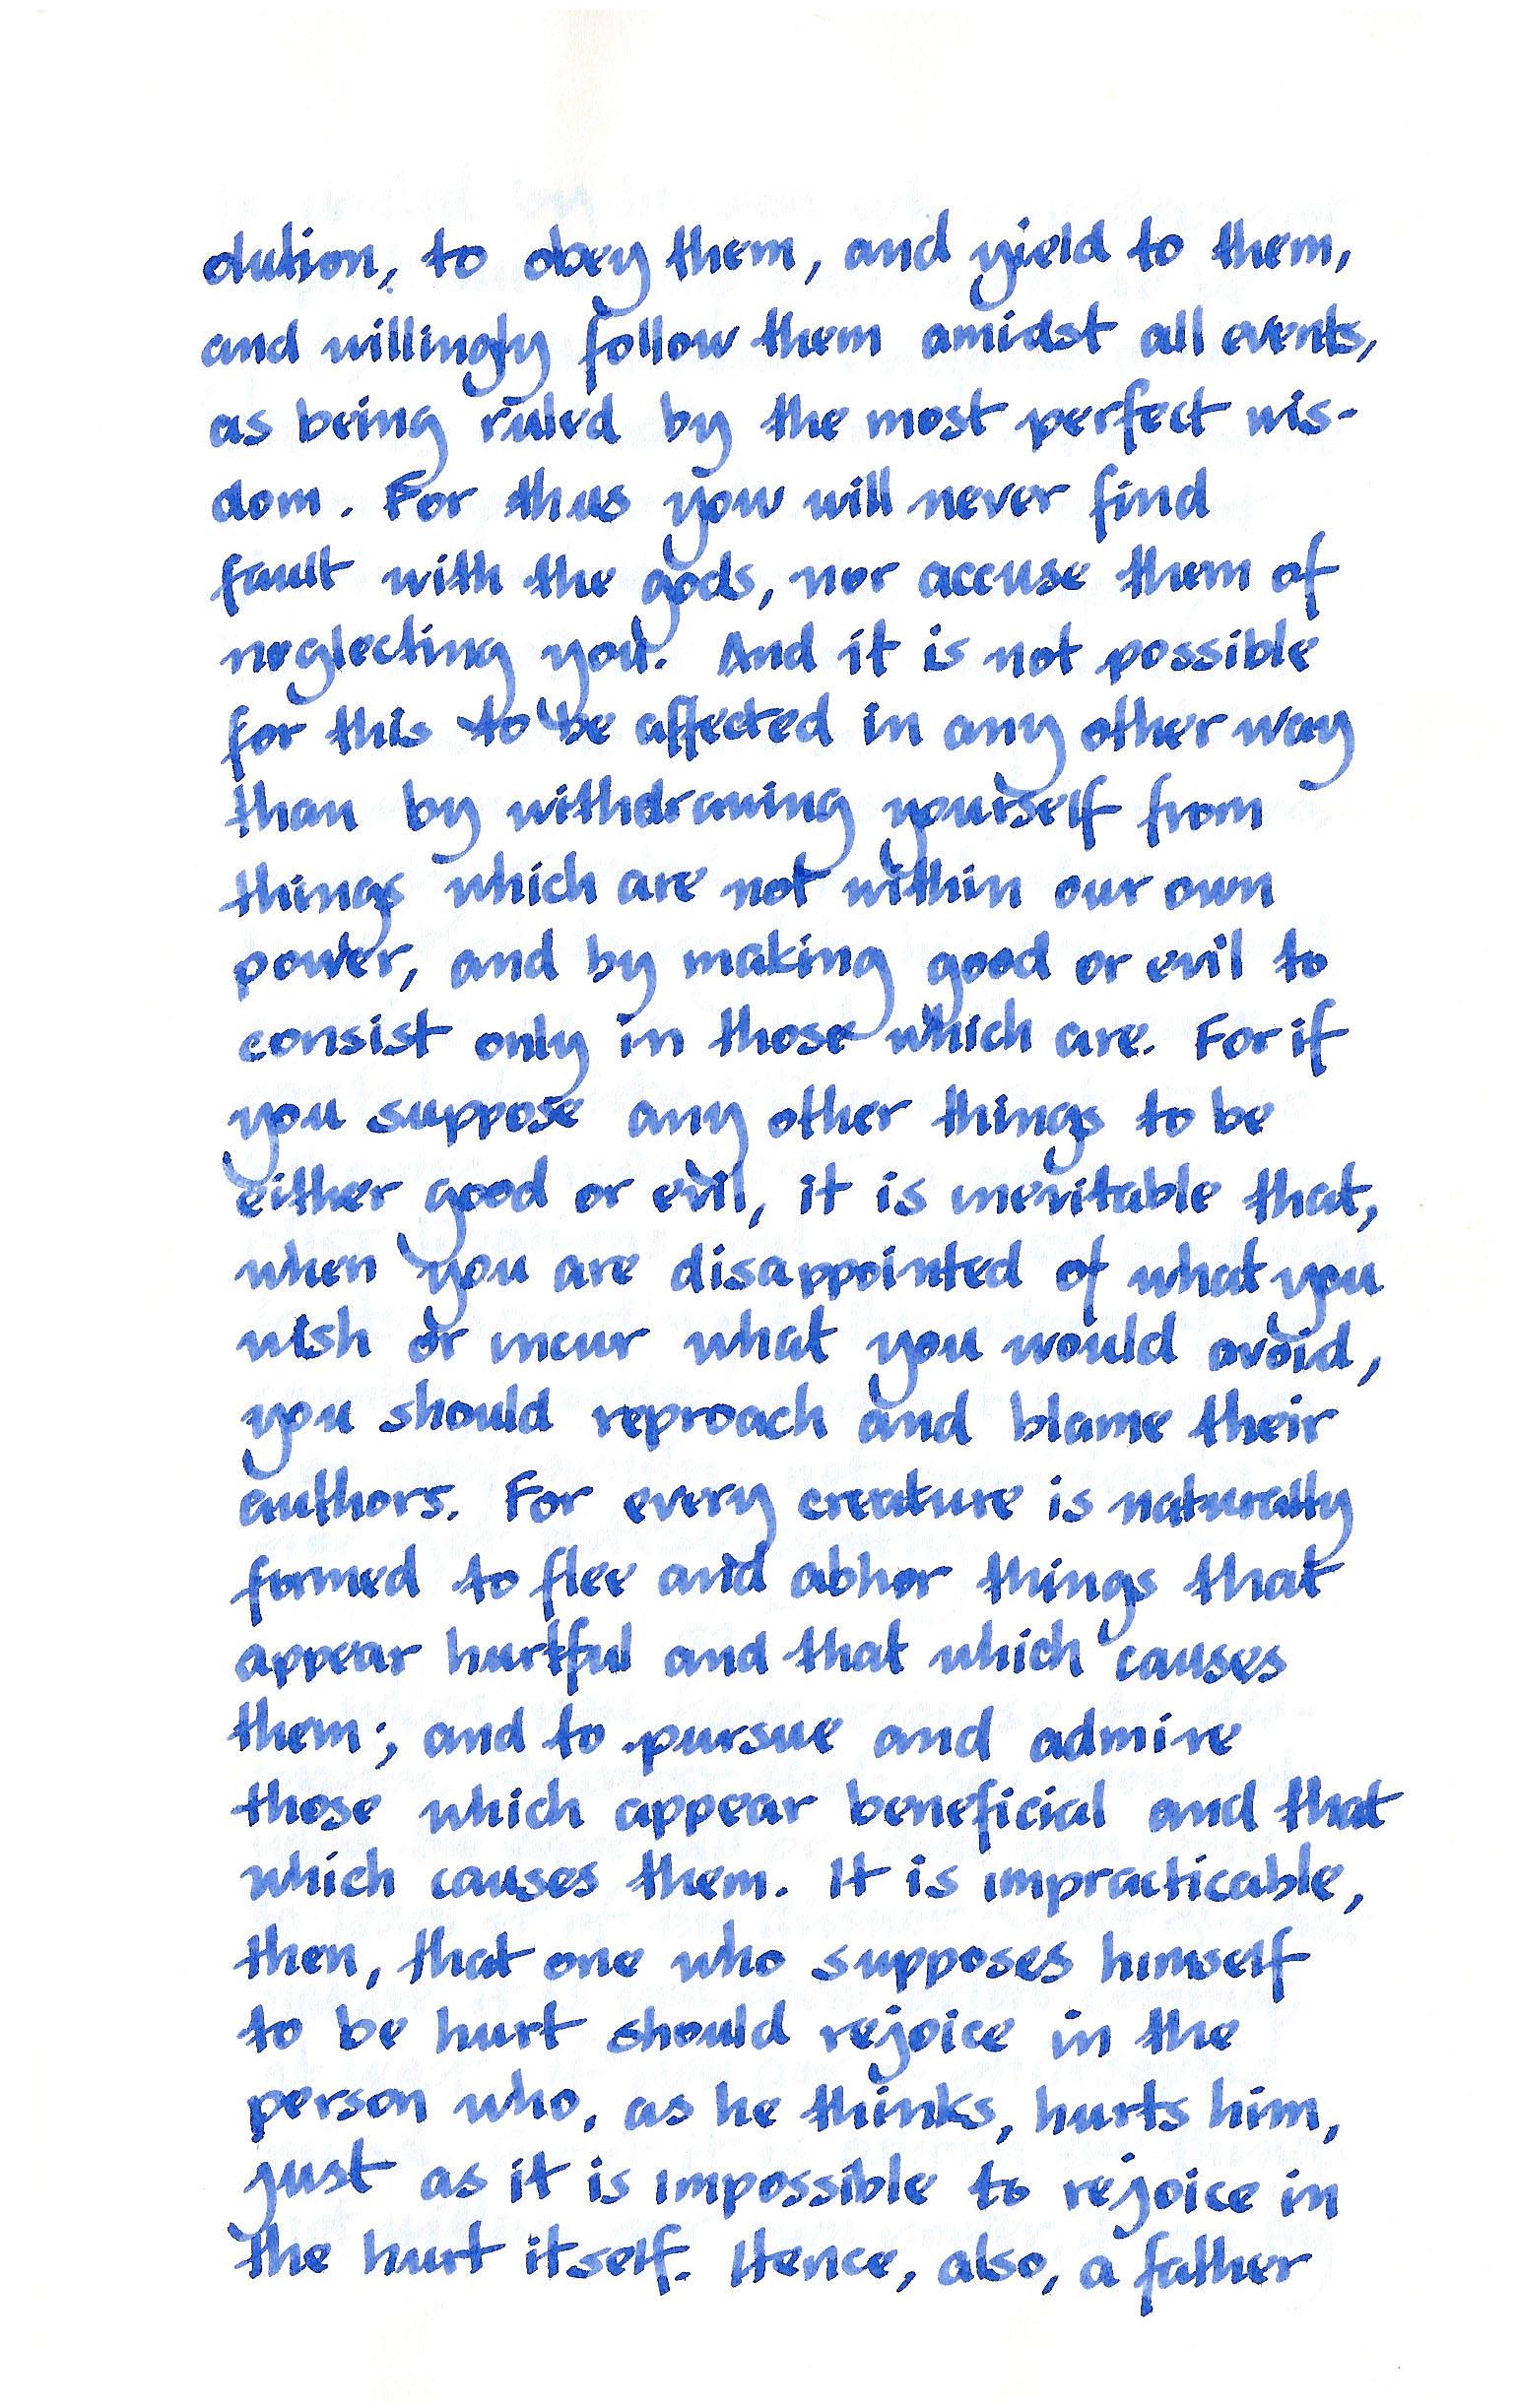 The Enchiridion by Epictetus (handwritten copy)